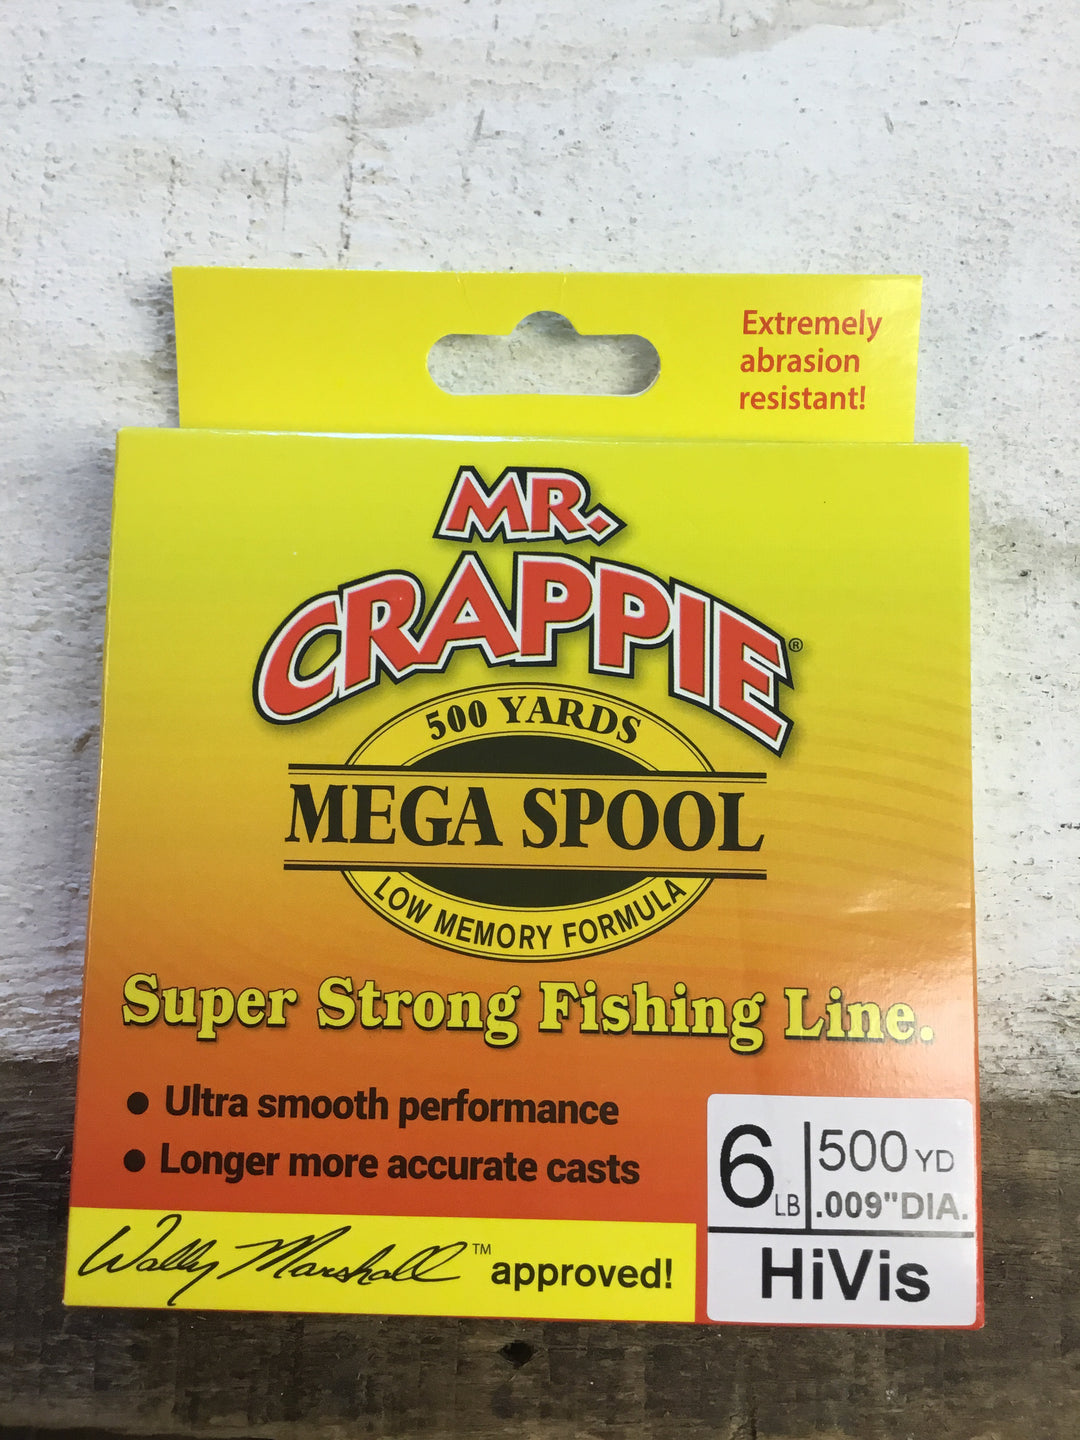 Mr.Crappie Mega Spool 500 yard